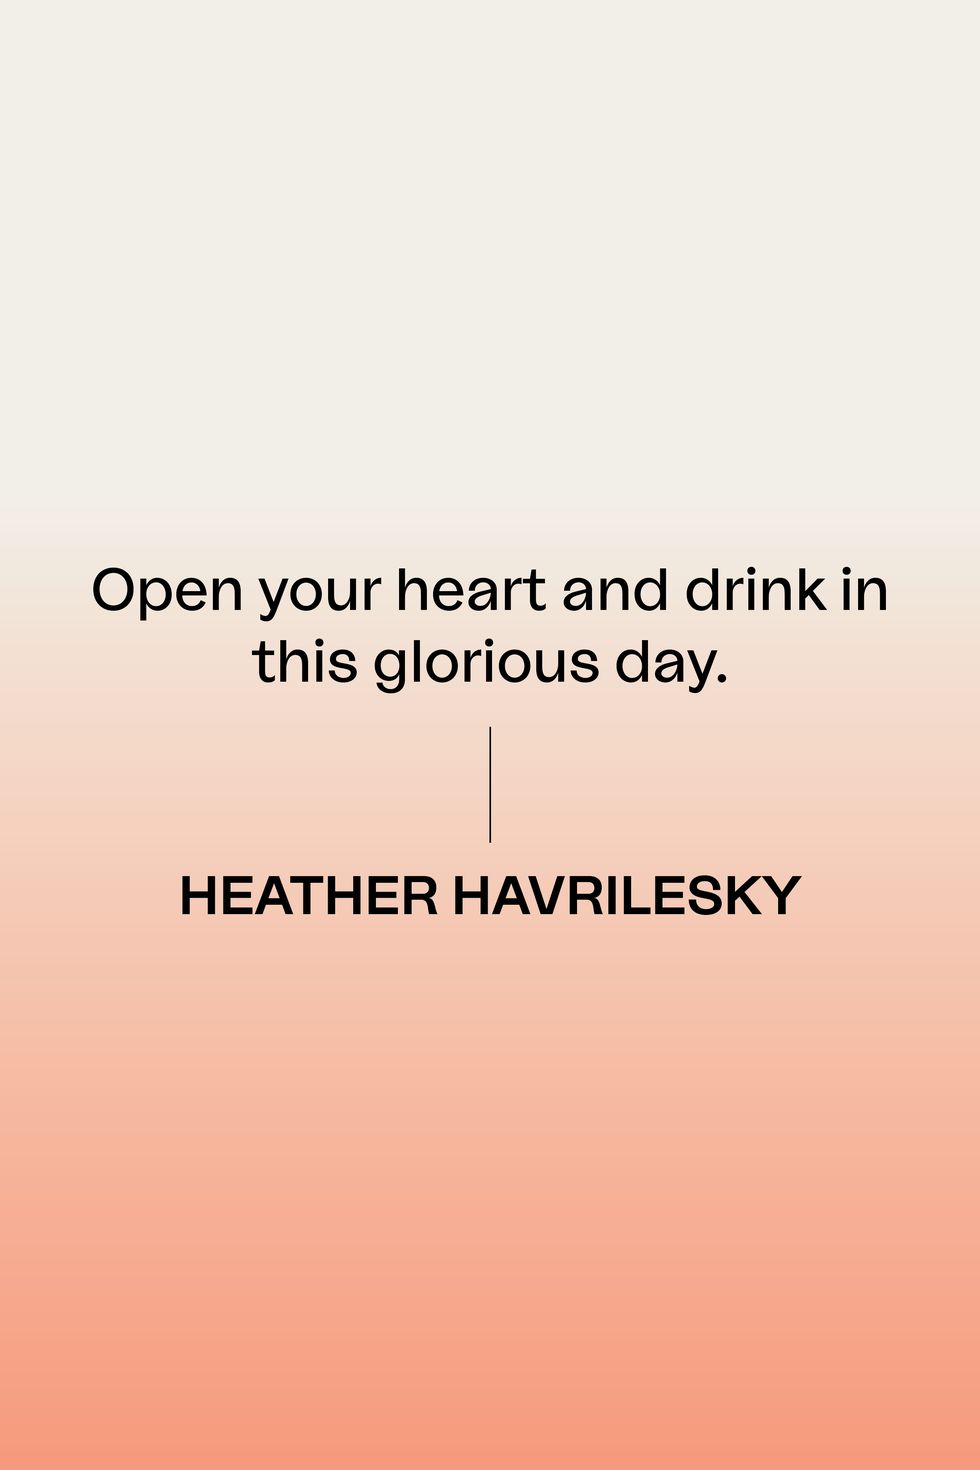 heather havrilesky quote